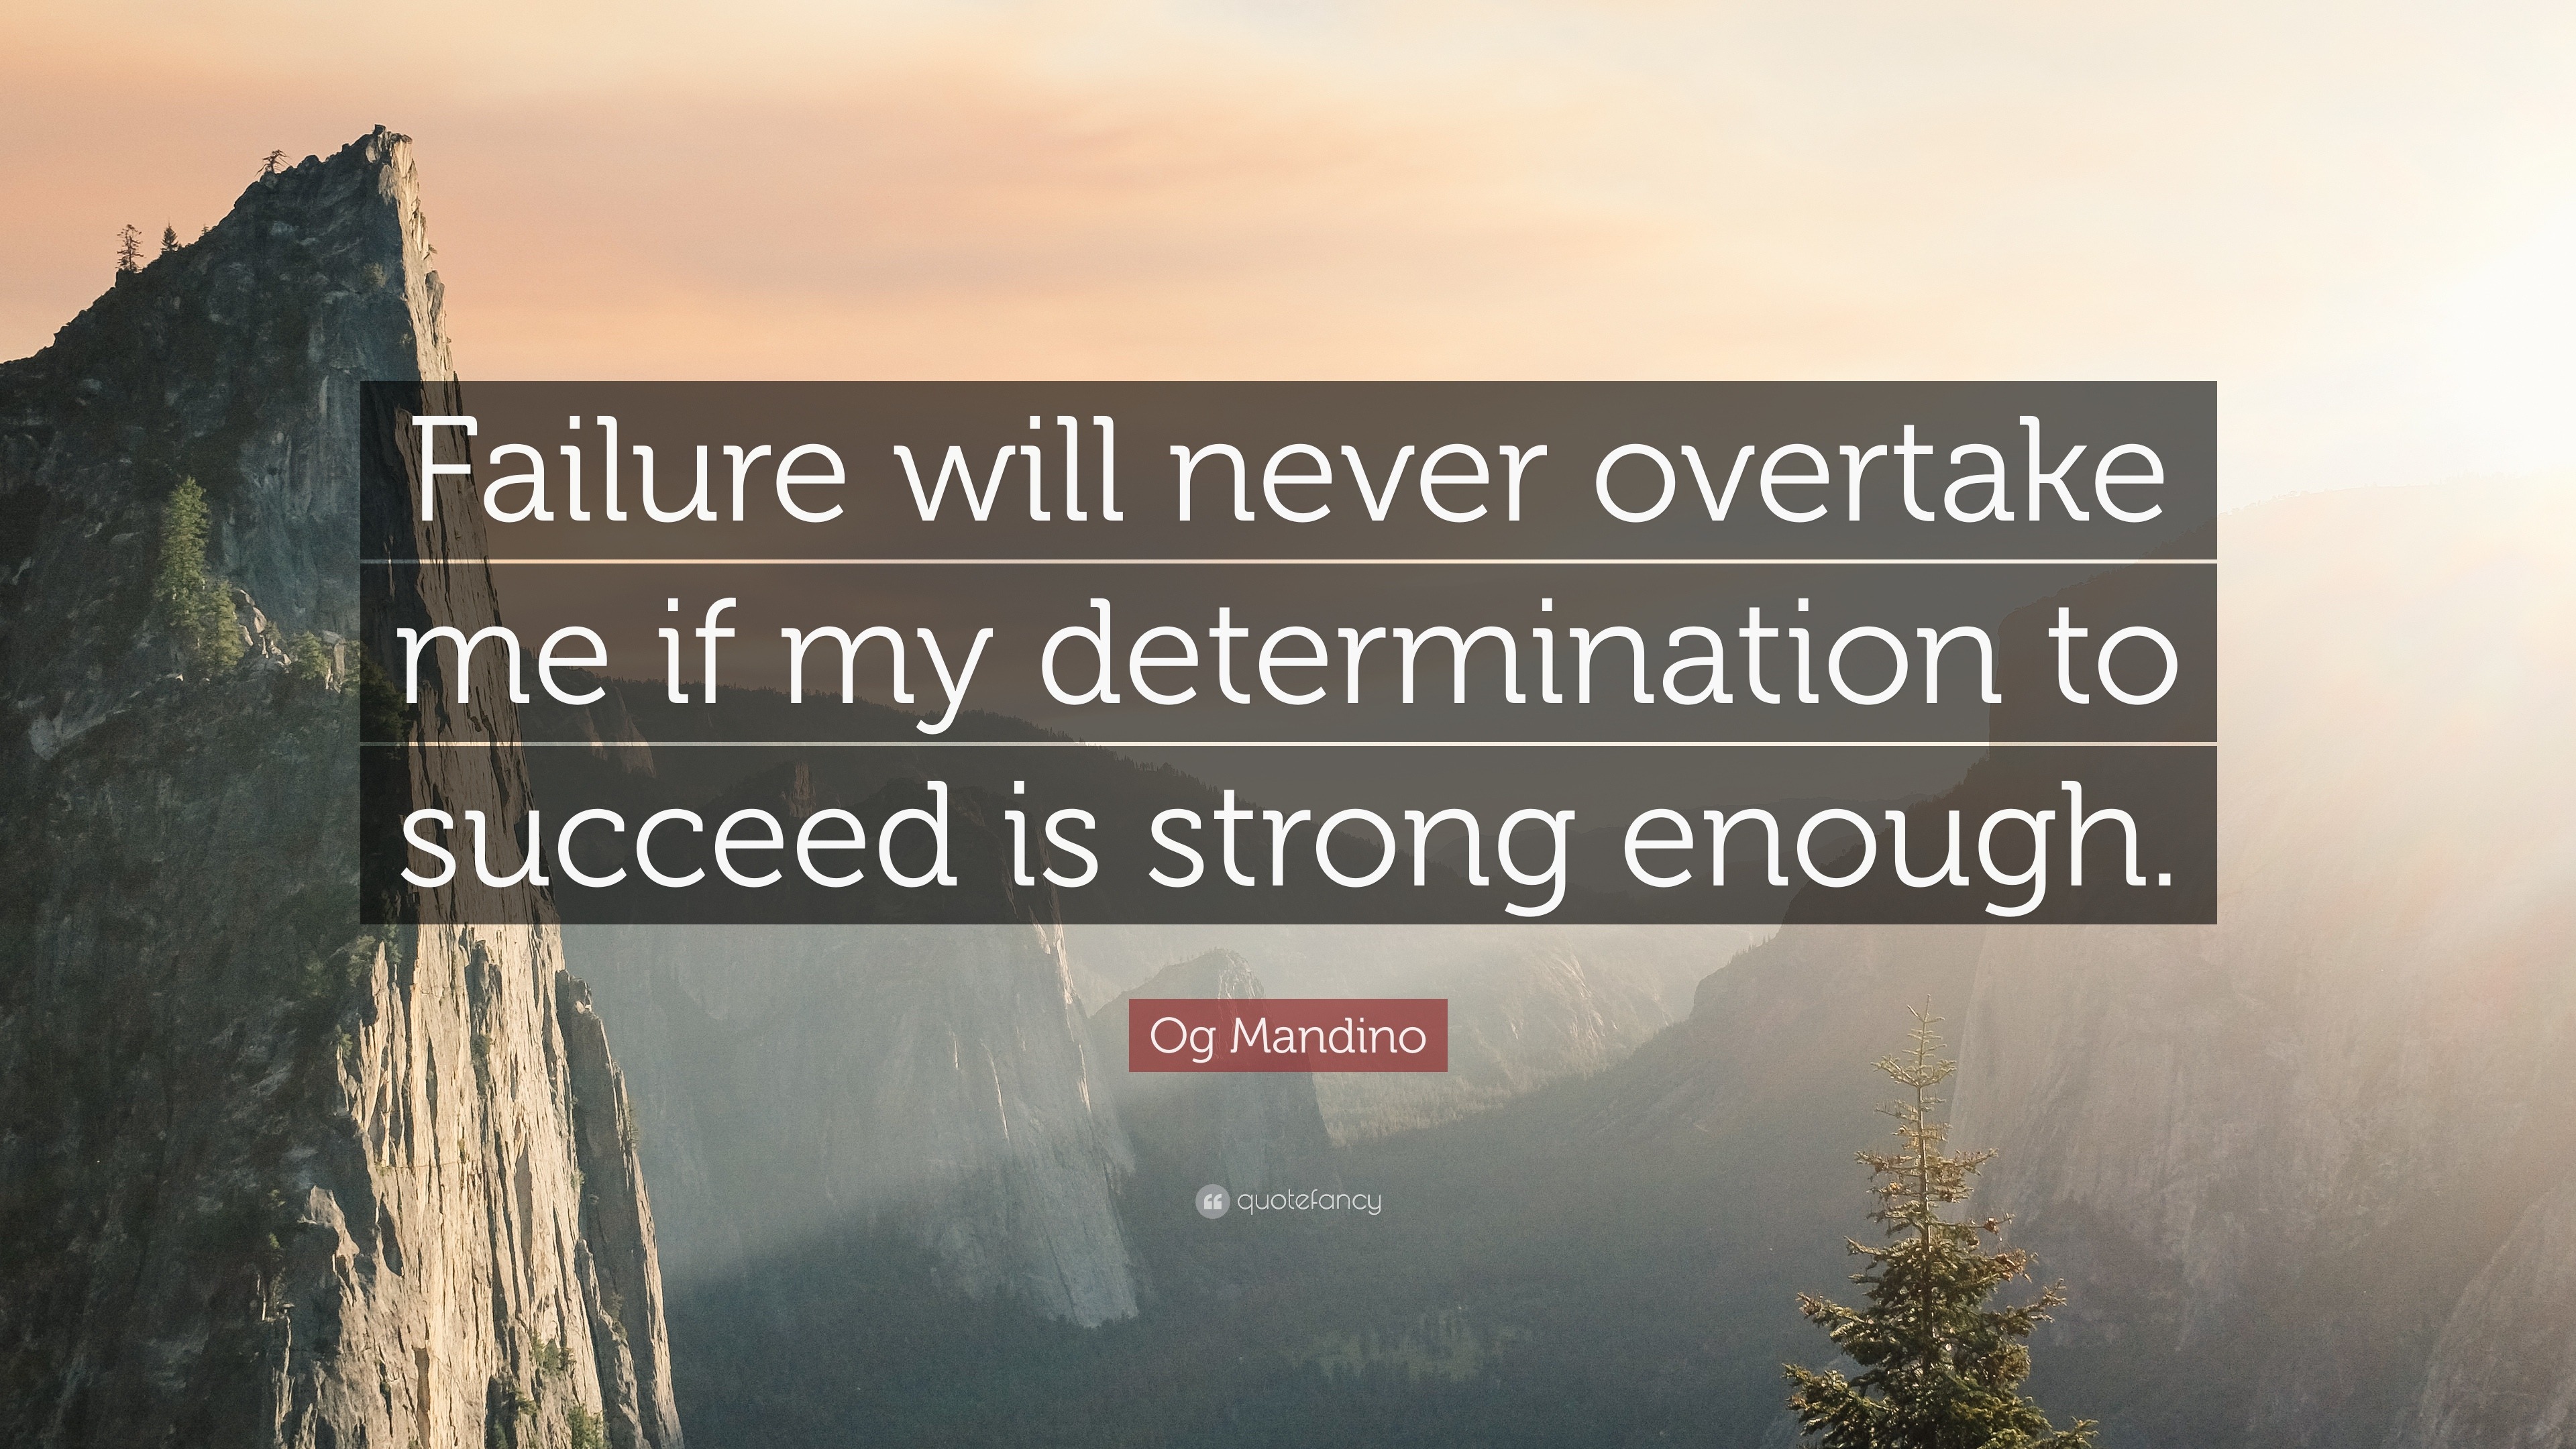 Og Mandino Quote: “Failure will never overtake me if my determination ...